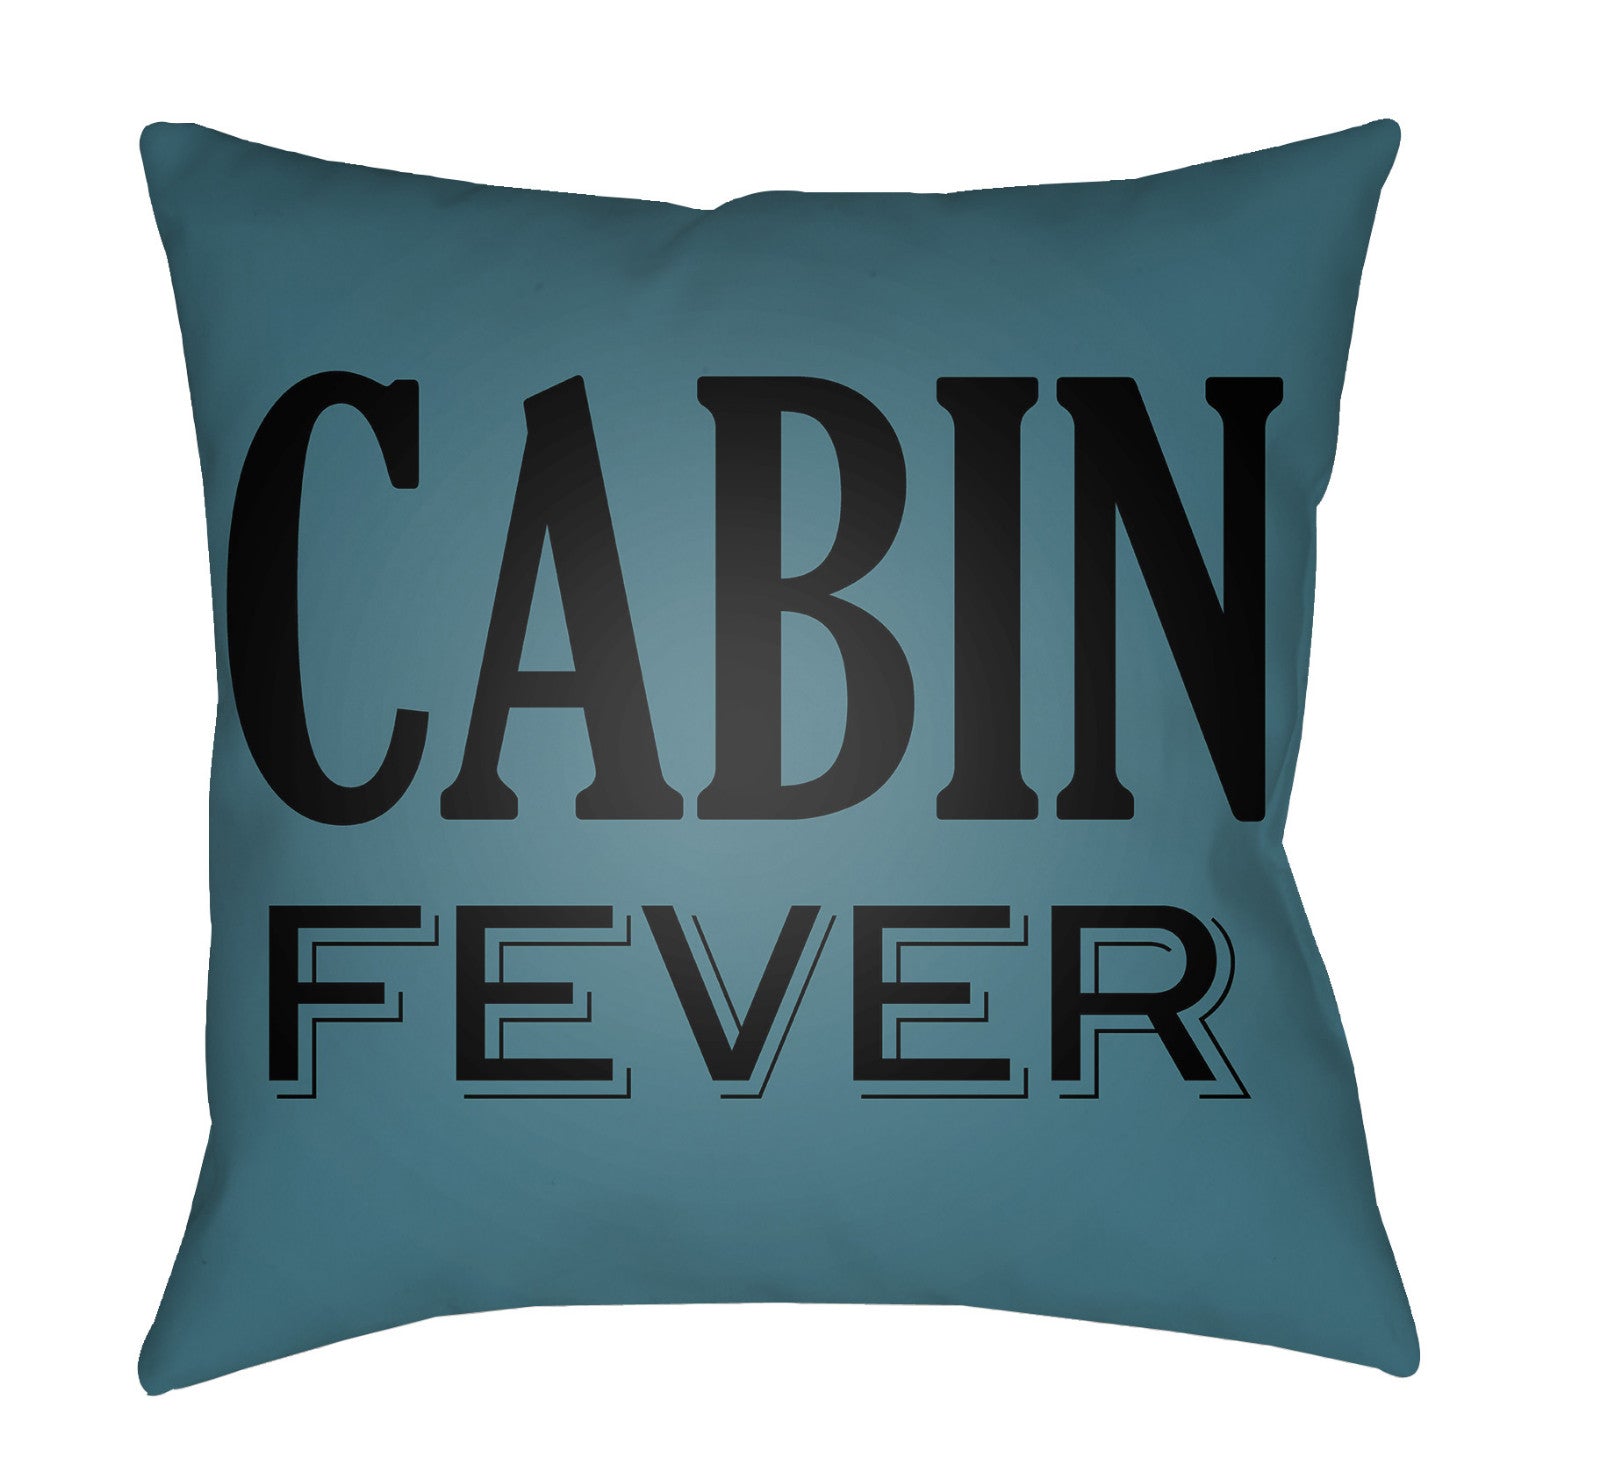 Artistic Weavers Lodge Cabin Fever Teal/Onyx Black main image